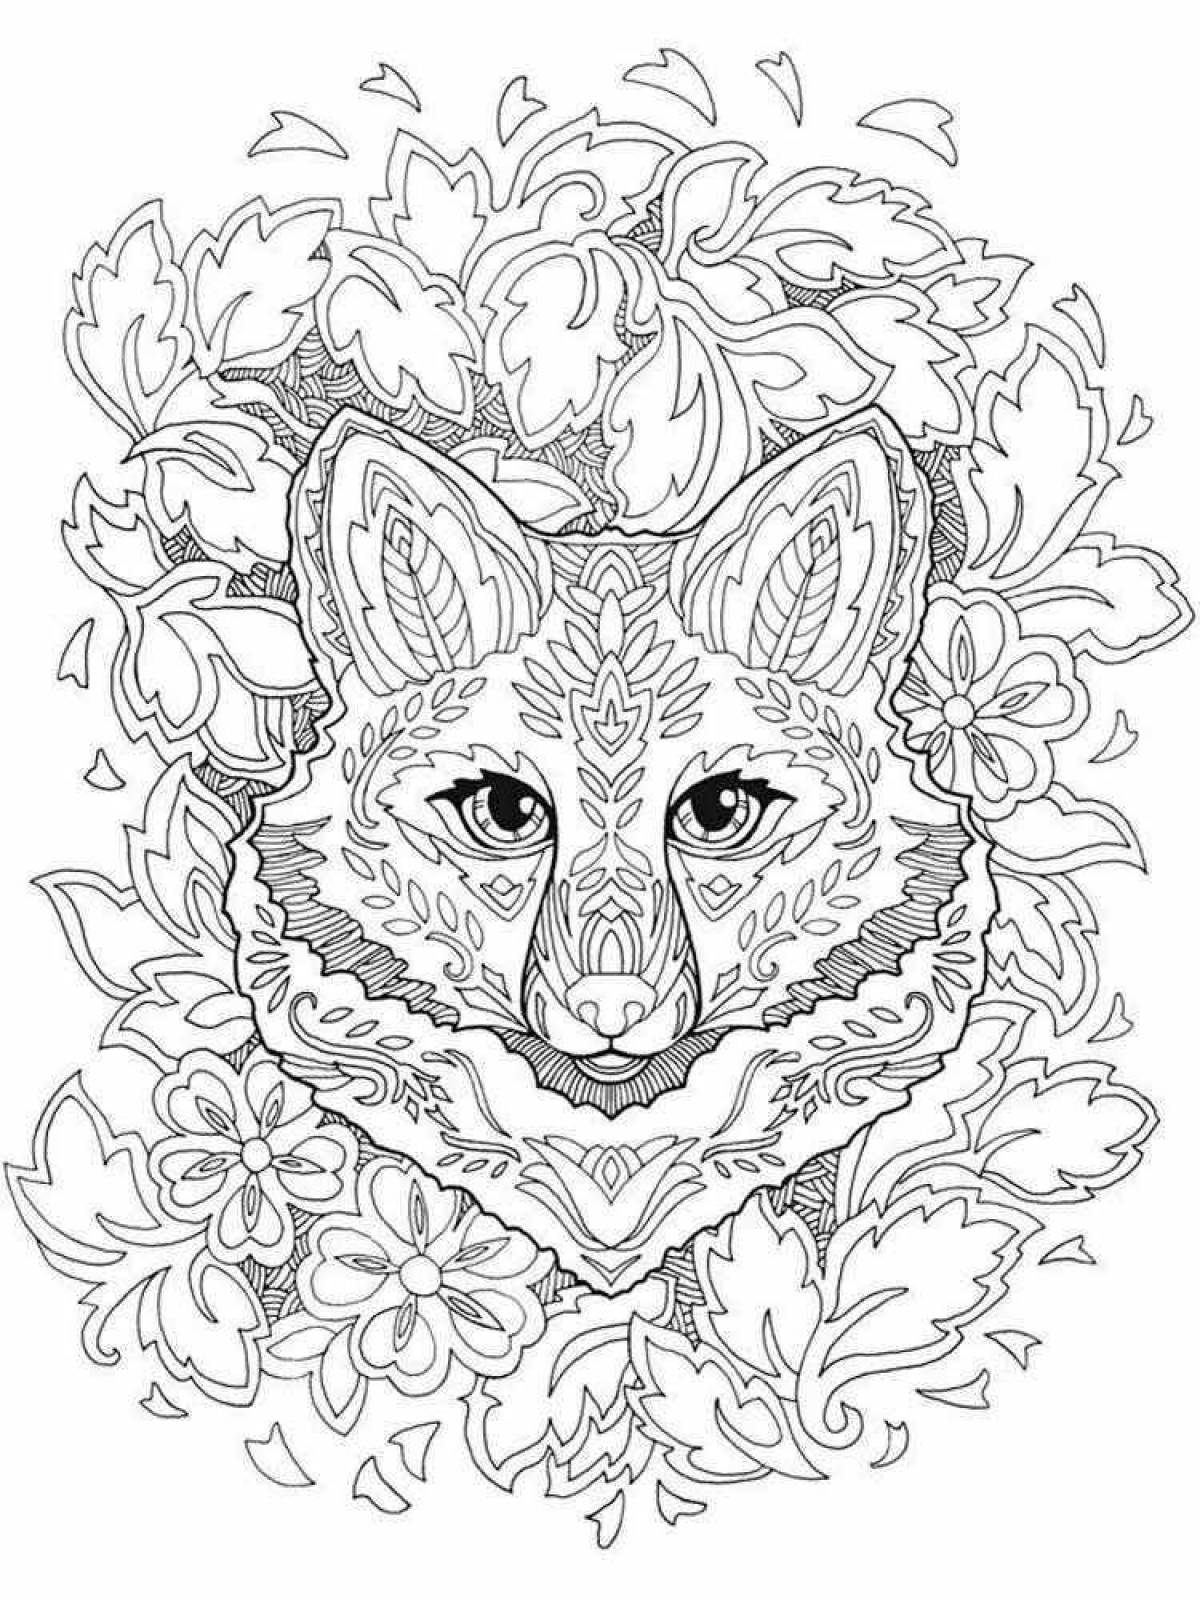 Calming fox anti-stress coloring book